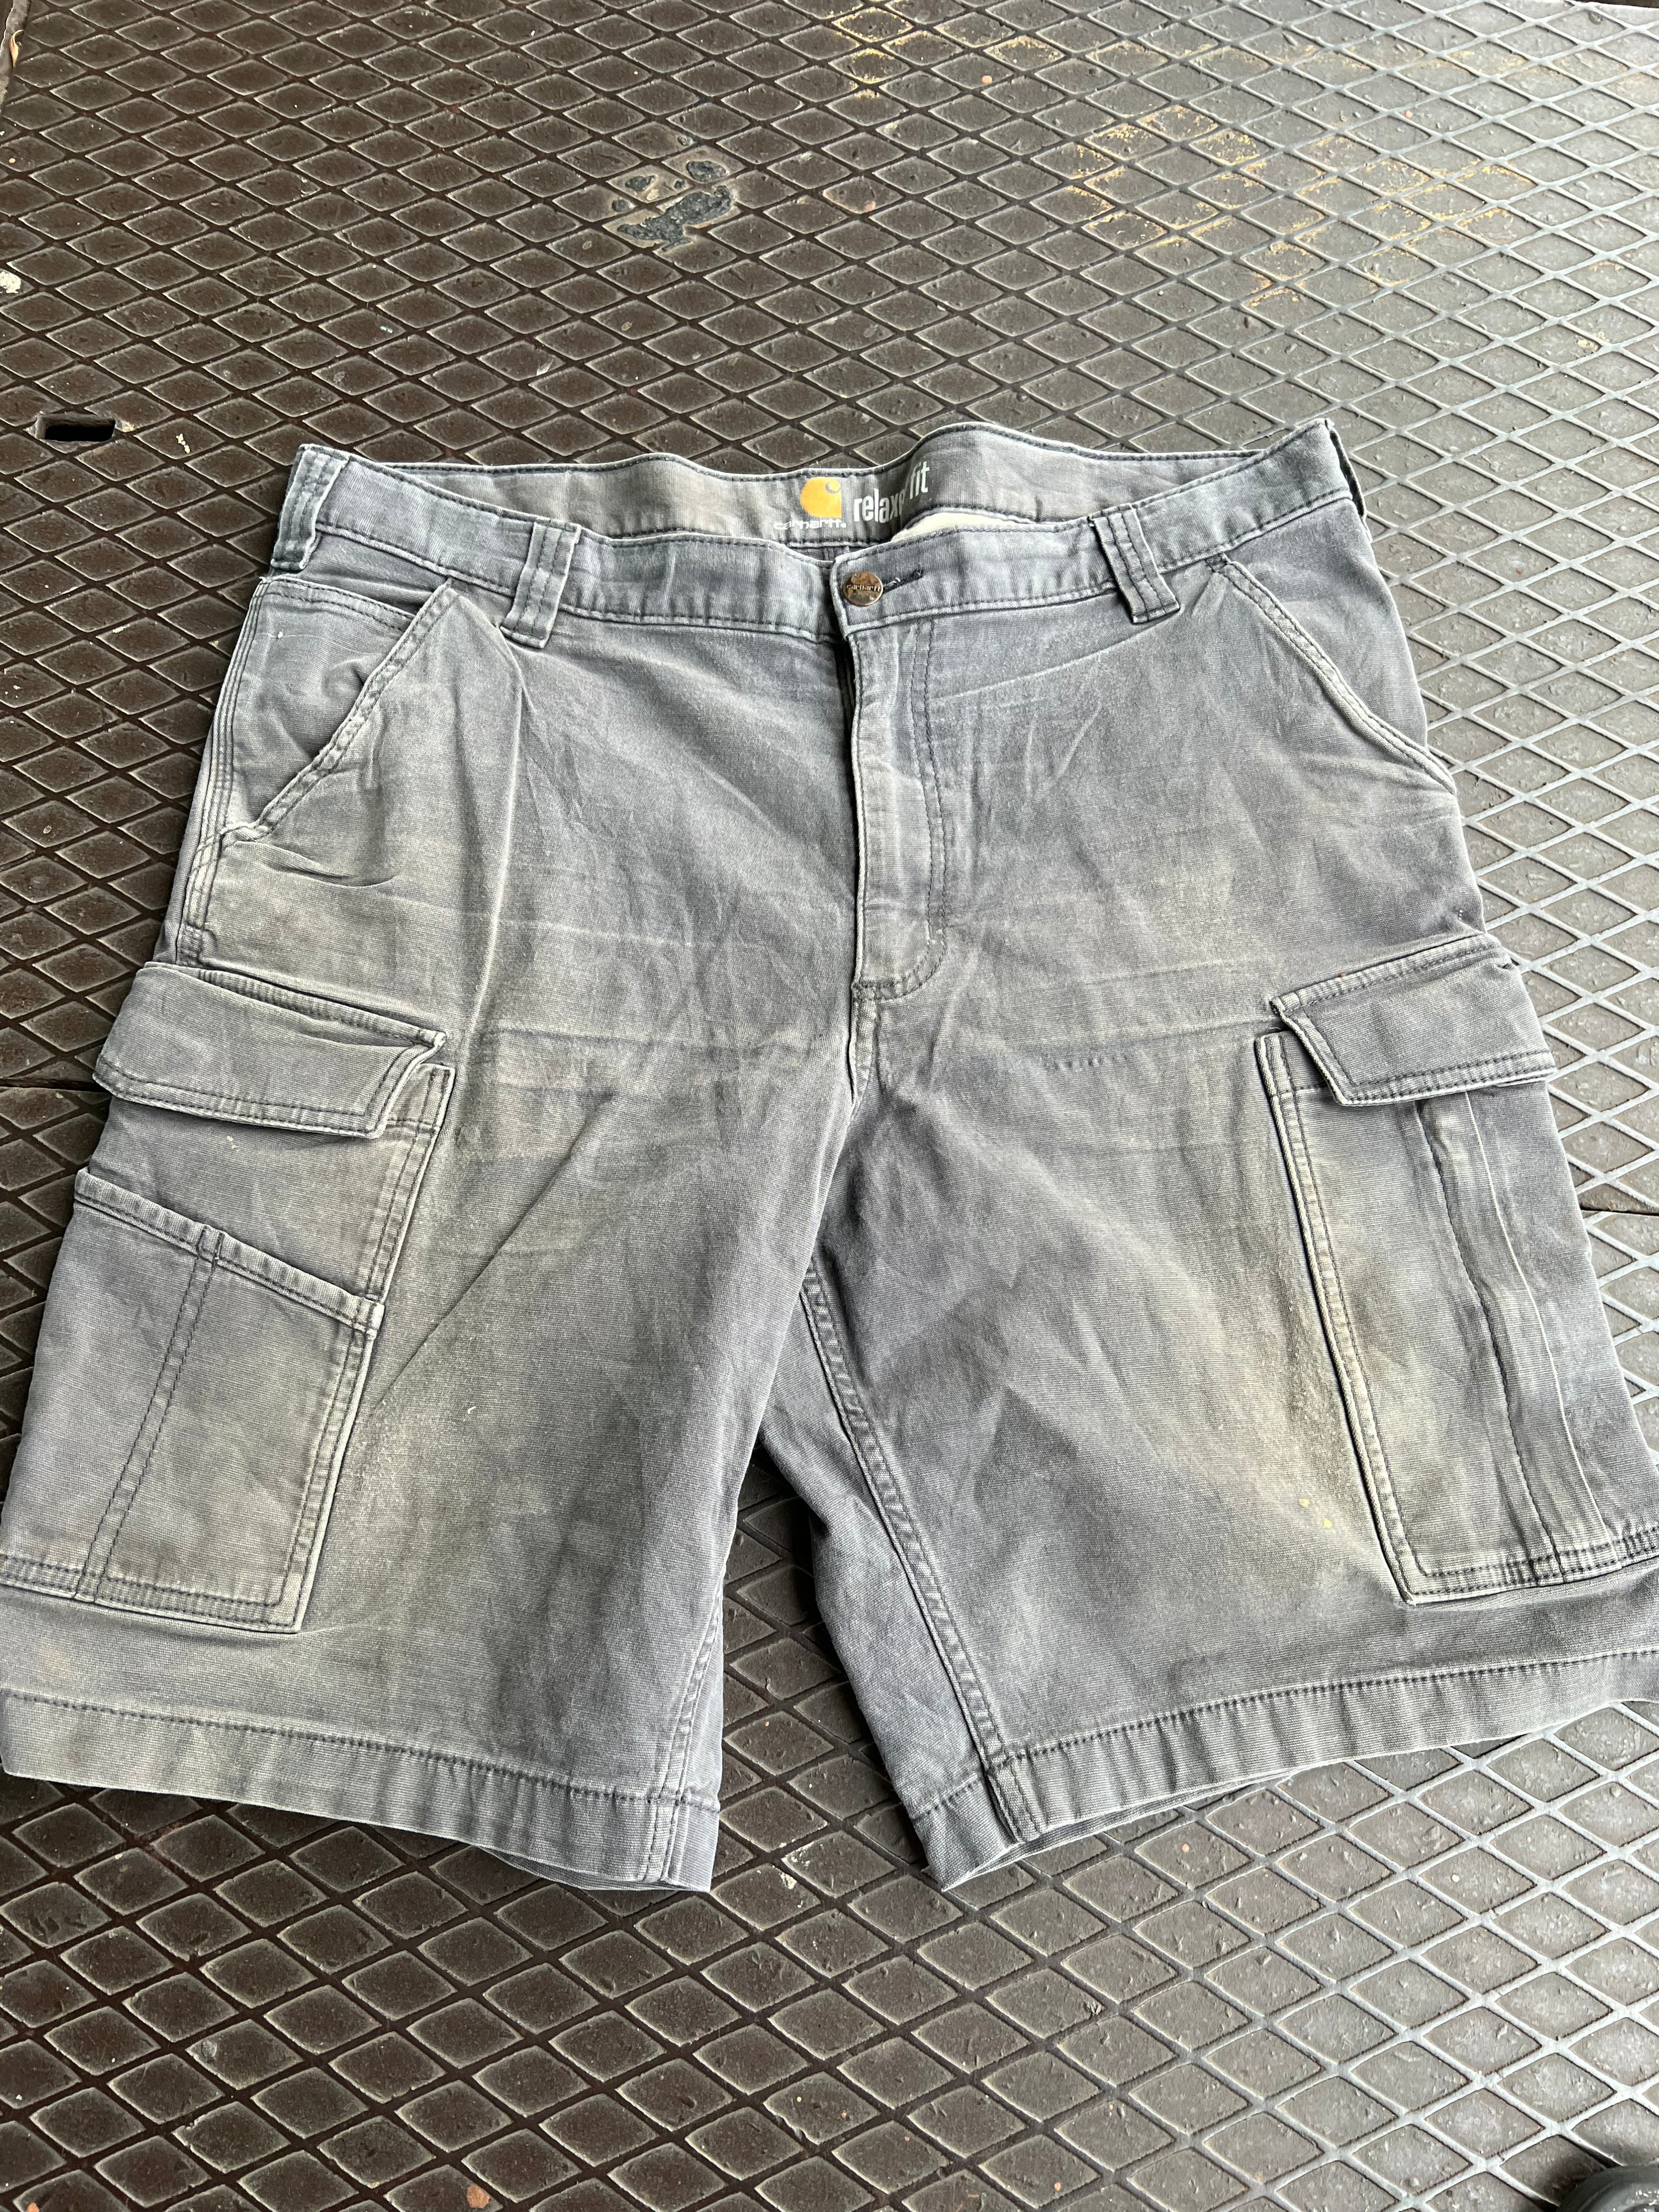 38 - Carhartt Cargo Shorts Faded Grey